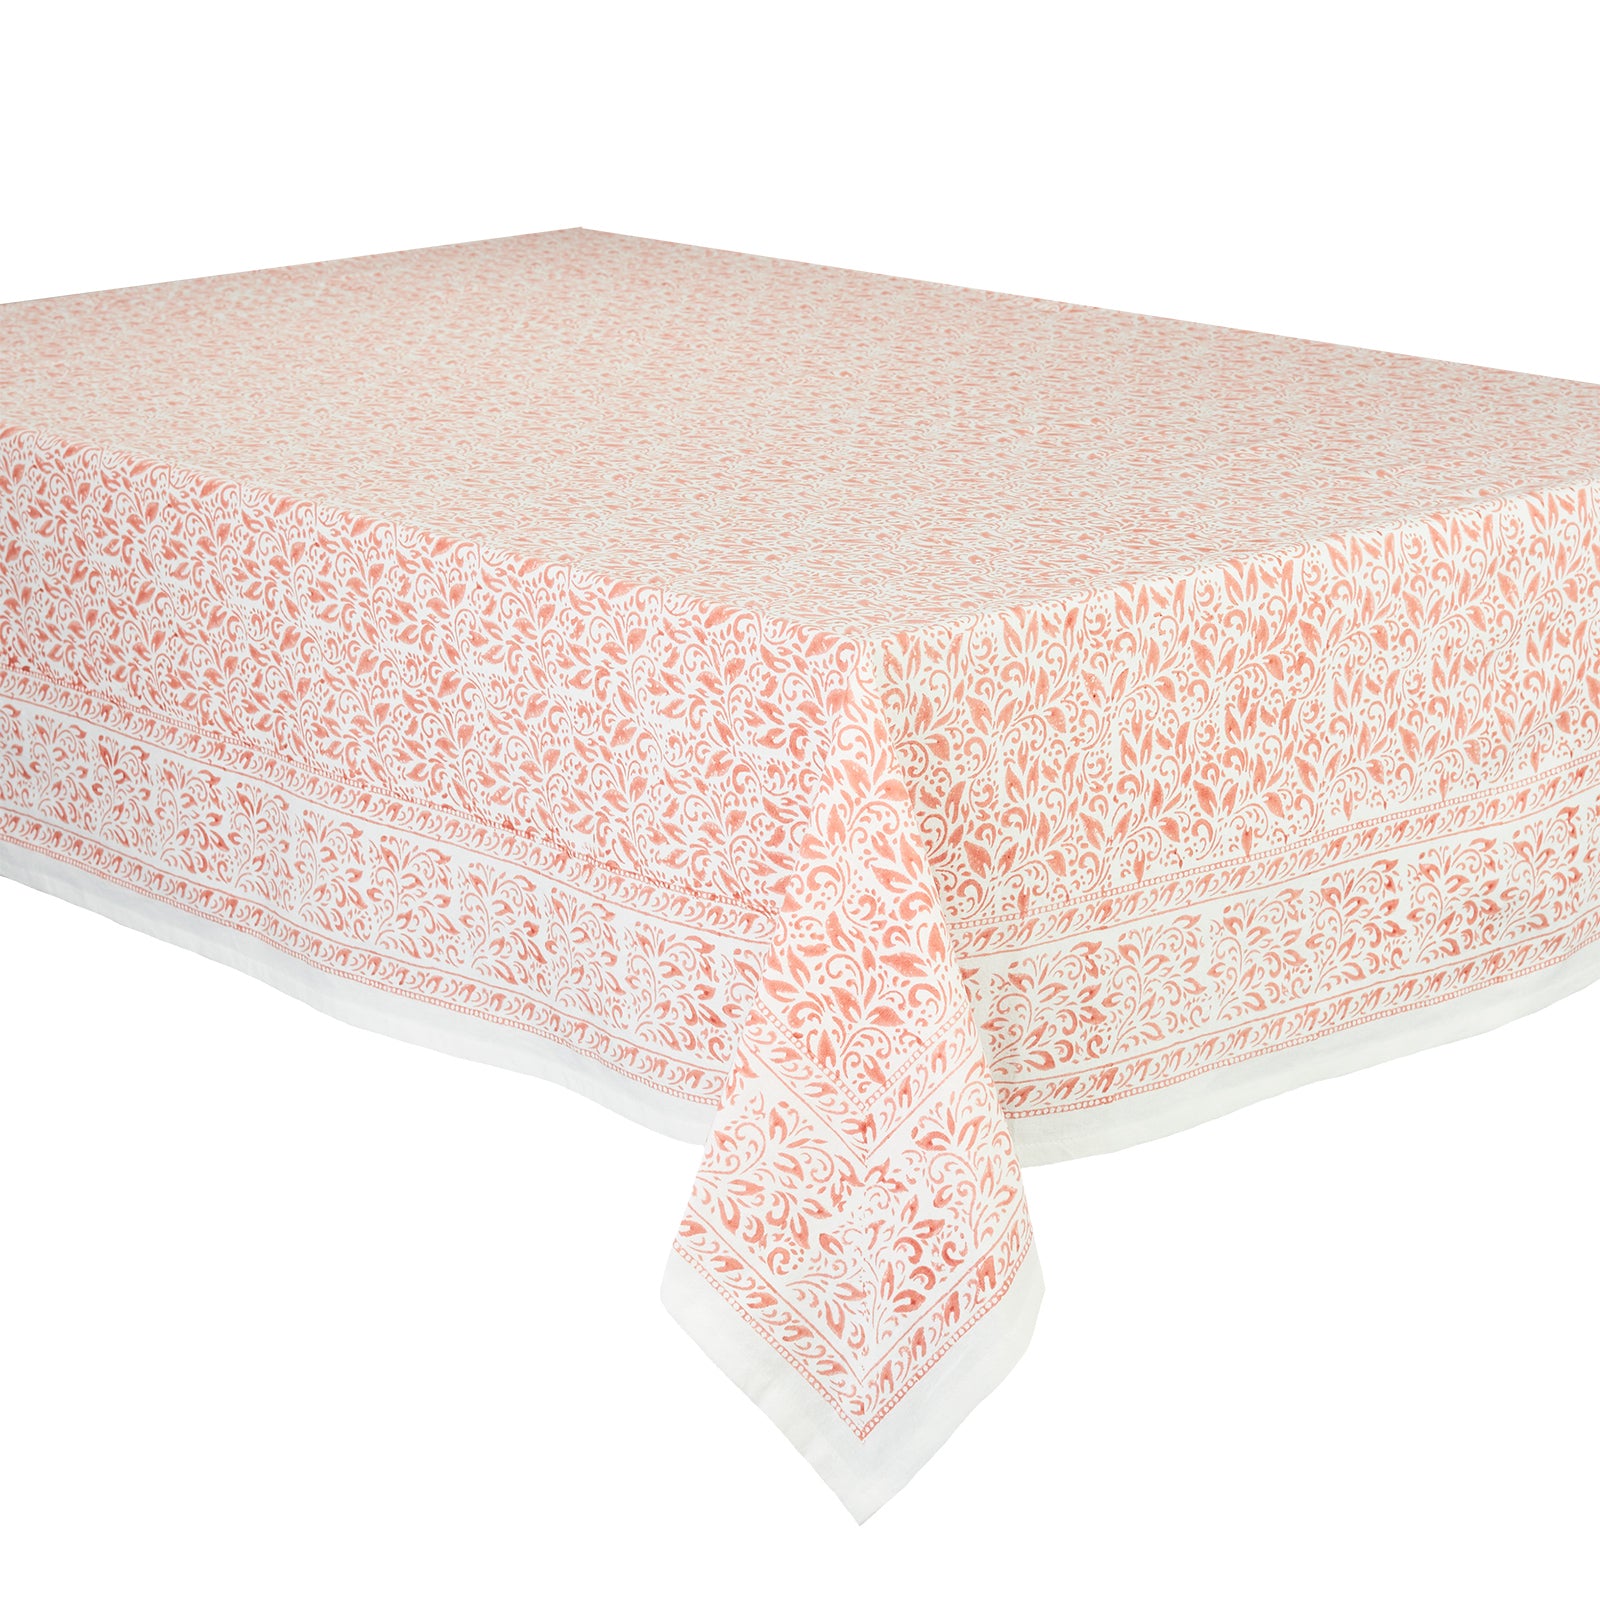 Nira Tablecloth in Coral